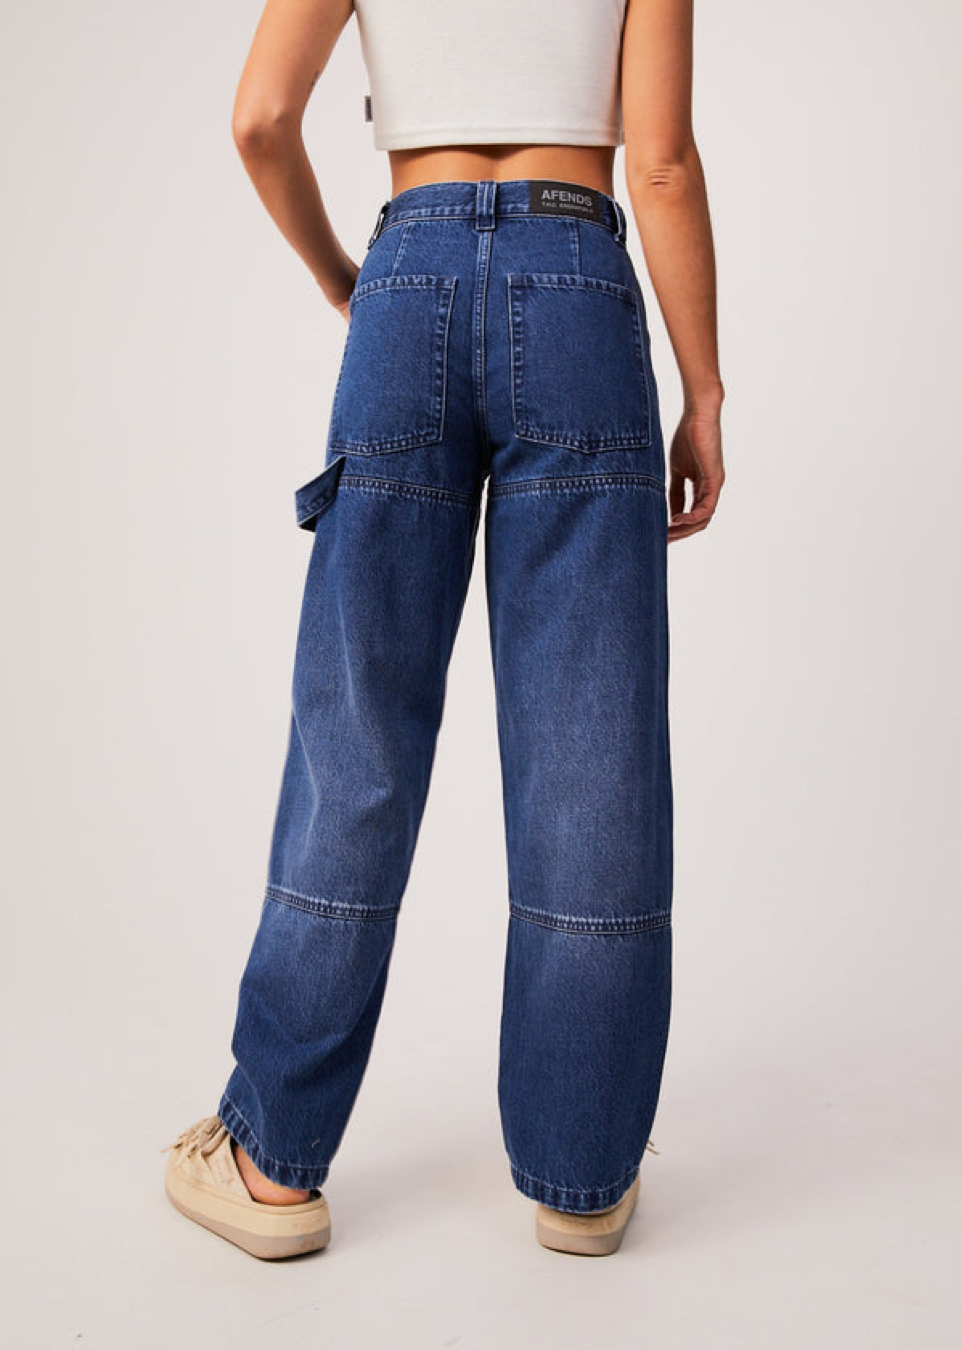 Moss - Women's Organic Denim Carpenter Jeans - Washed Black